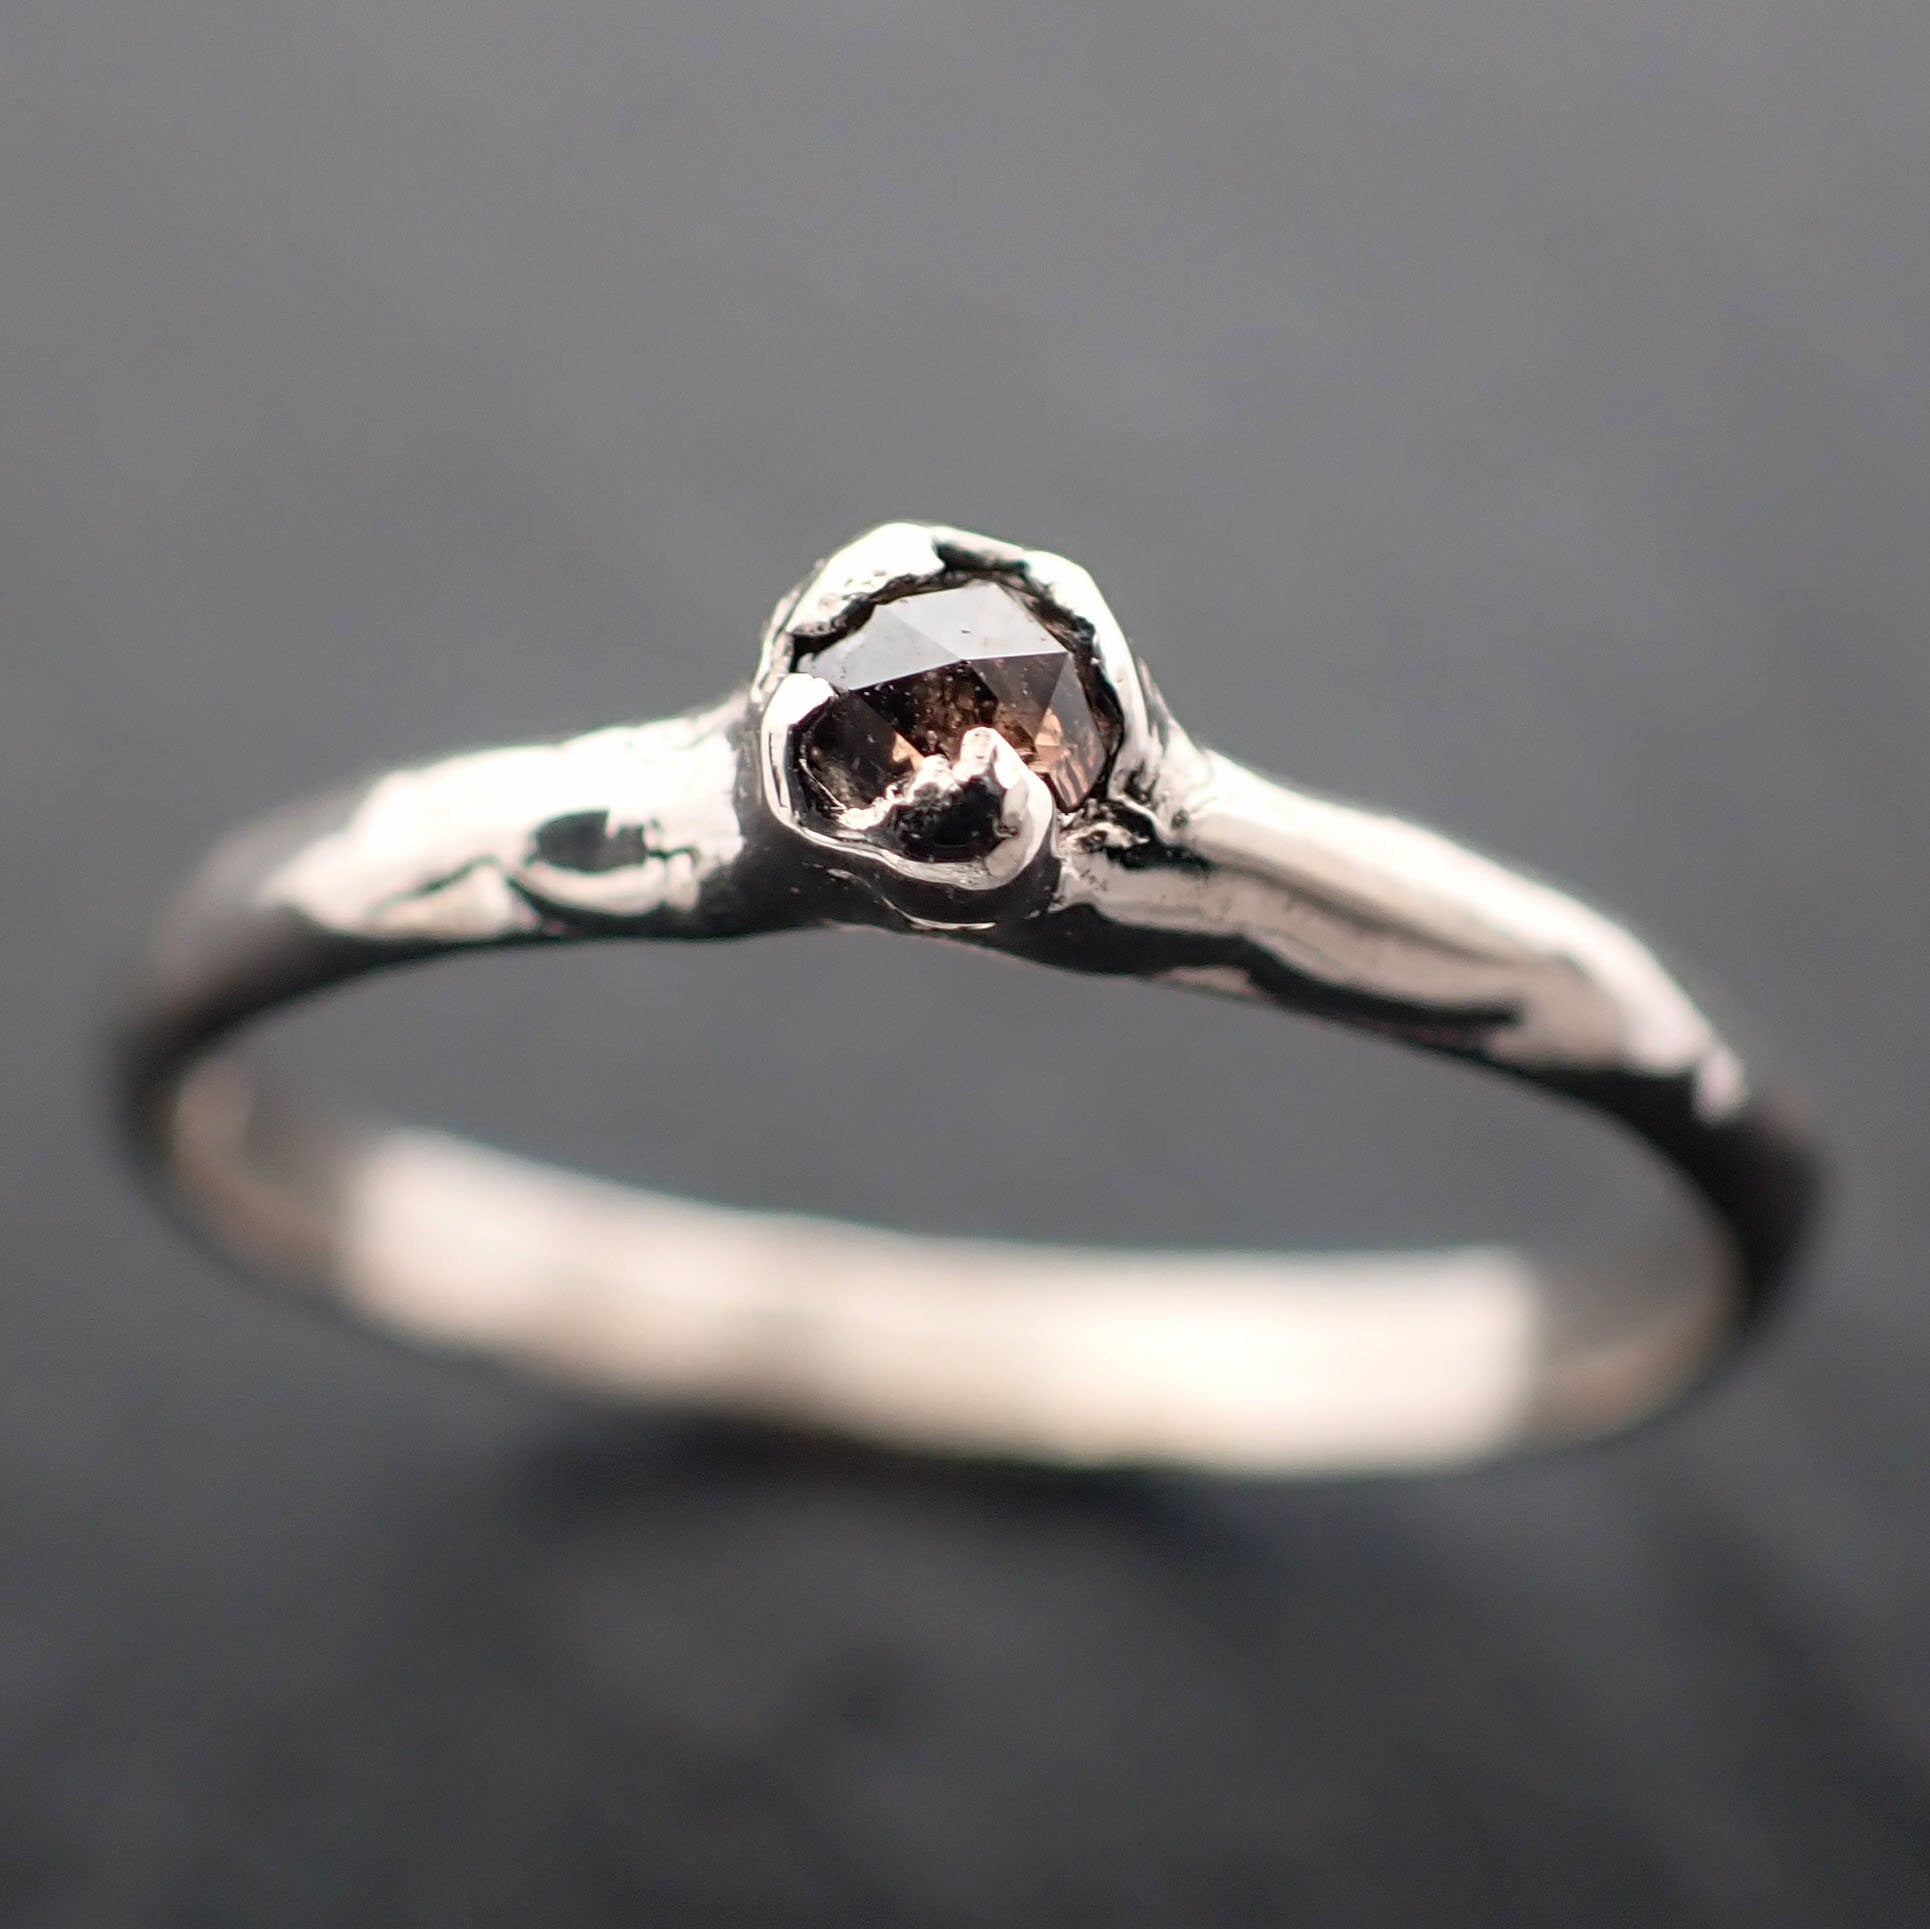 Faceted Fancy cut Cognac Diamond Solitaire Engagement 14k White Gold Wedding Ring byAngeline 3515